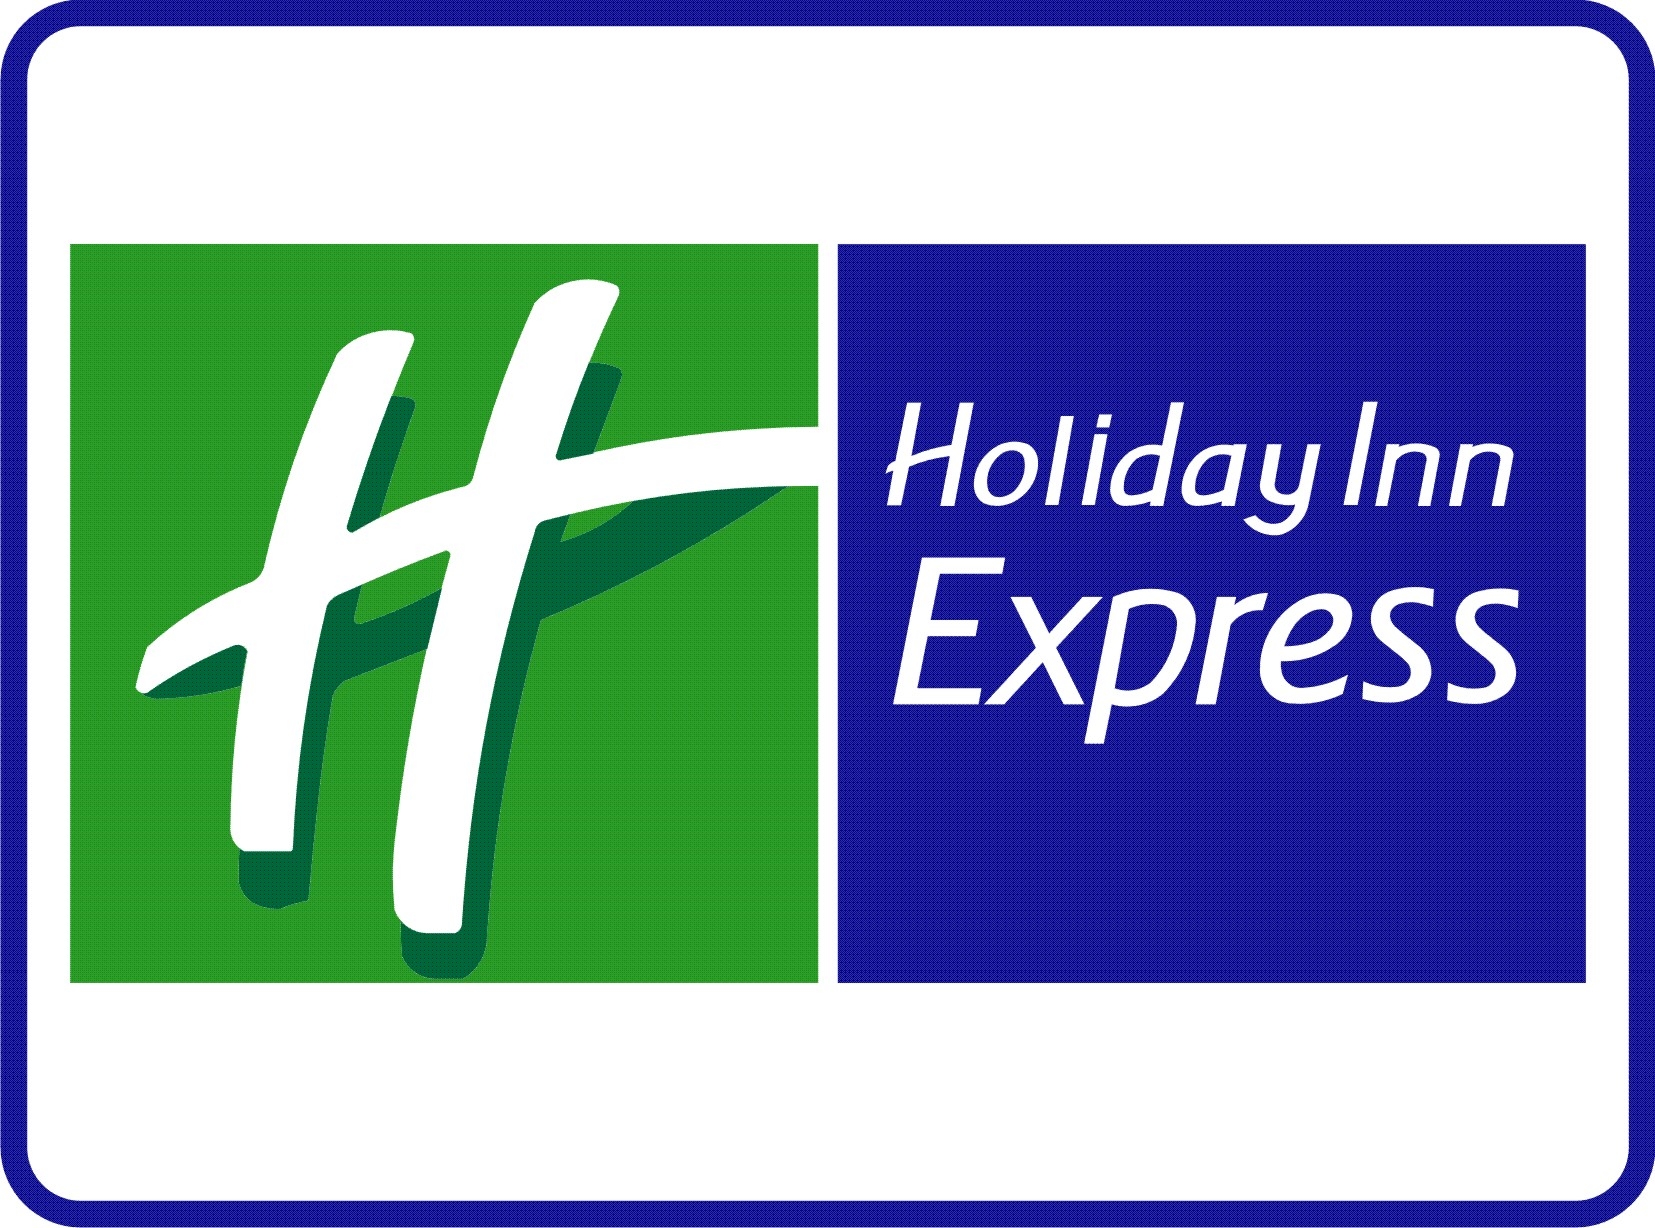 Holiday Inn Express Logo Vector at Collection of